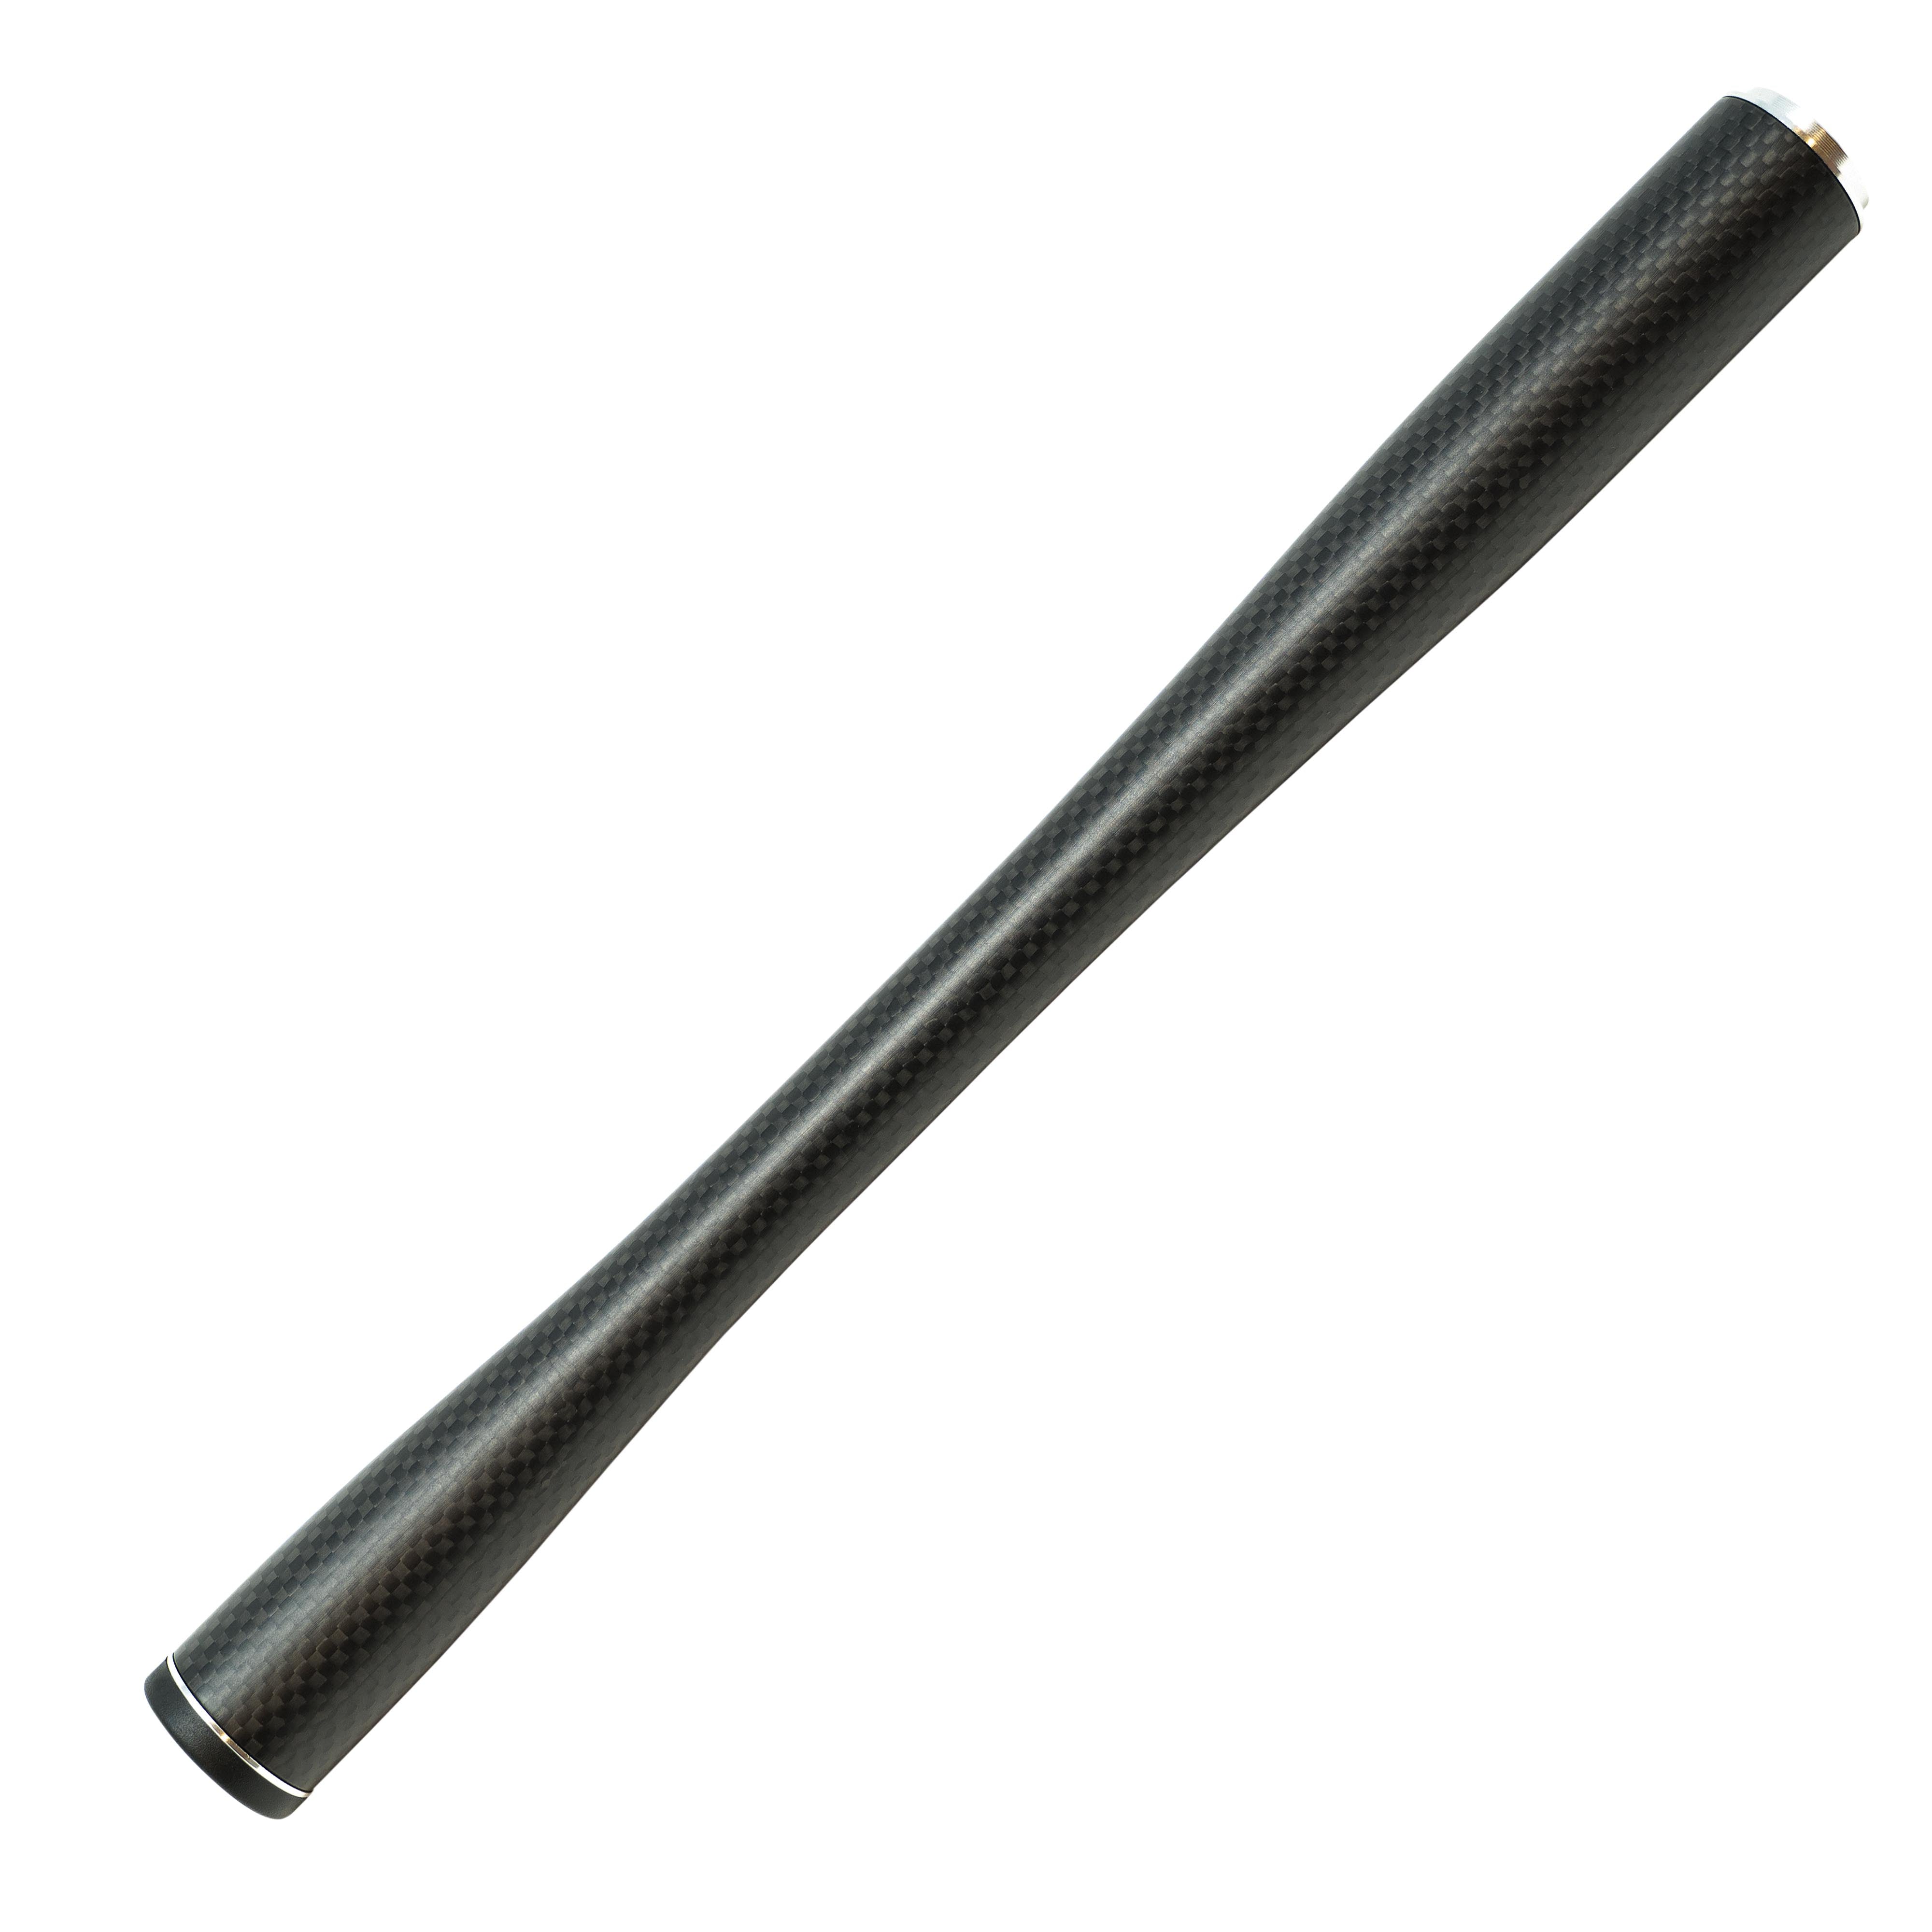 G2 12 Full Length Carbon Handle Grip Kit for Casting Rods